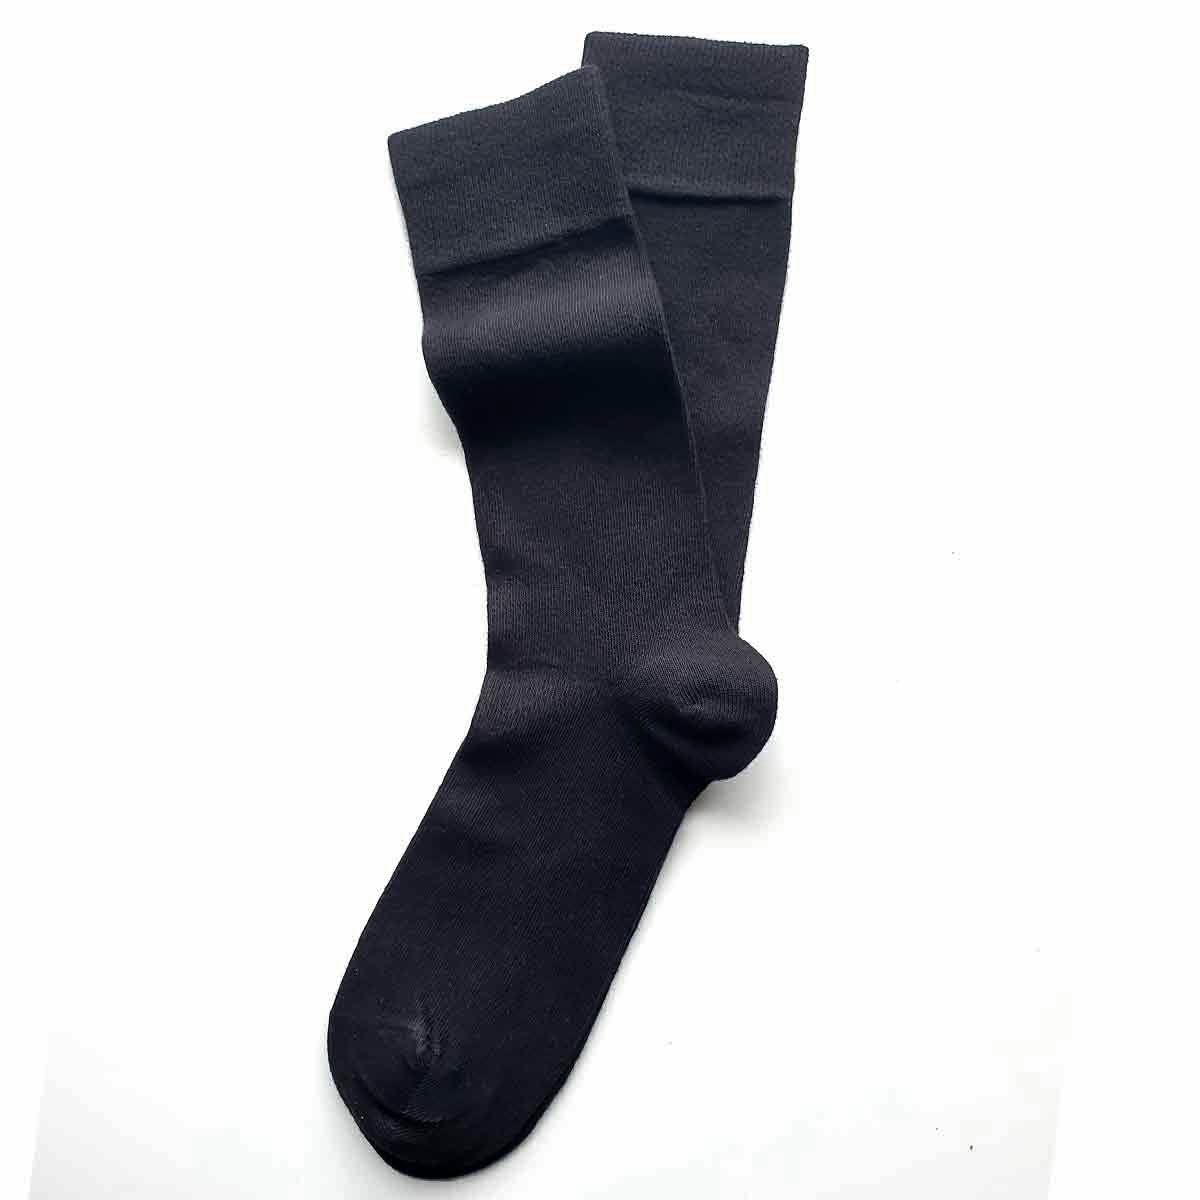 Soft 80% organic cotton socks for men in colours